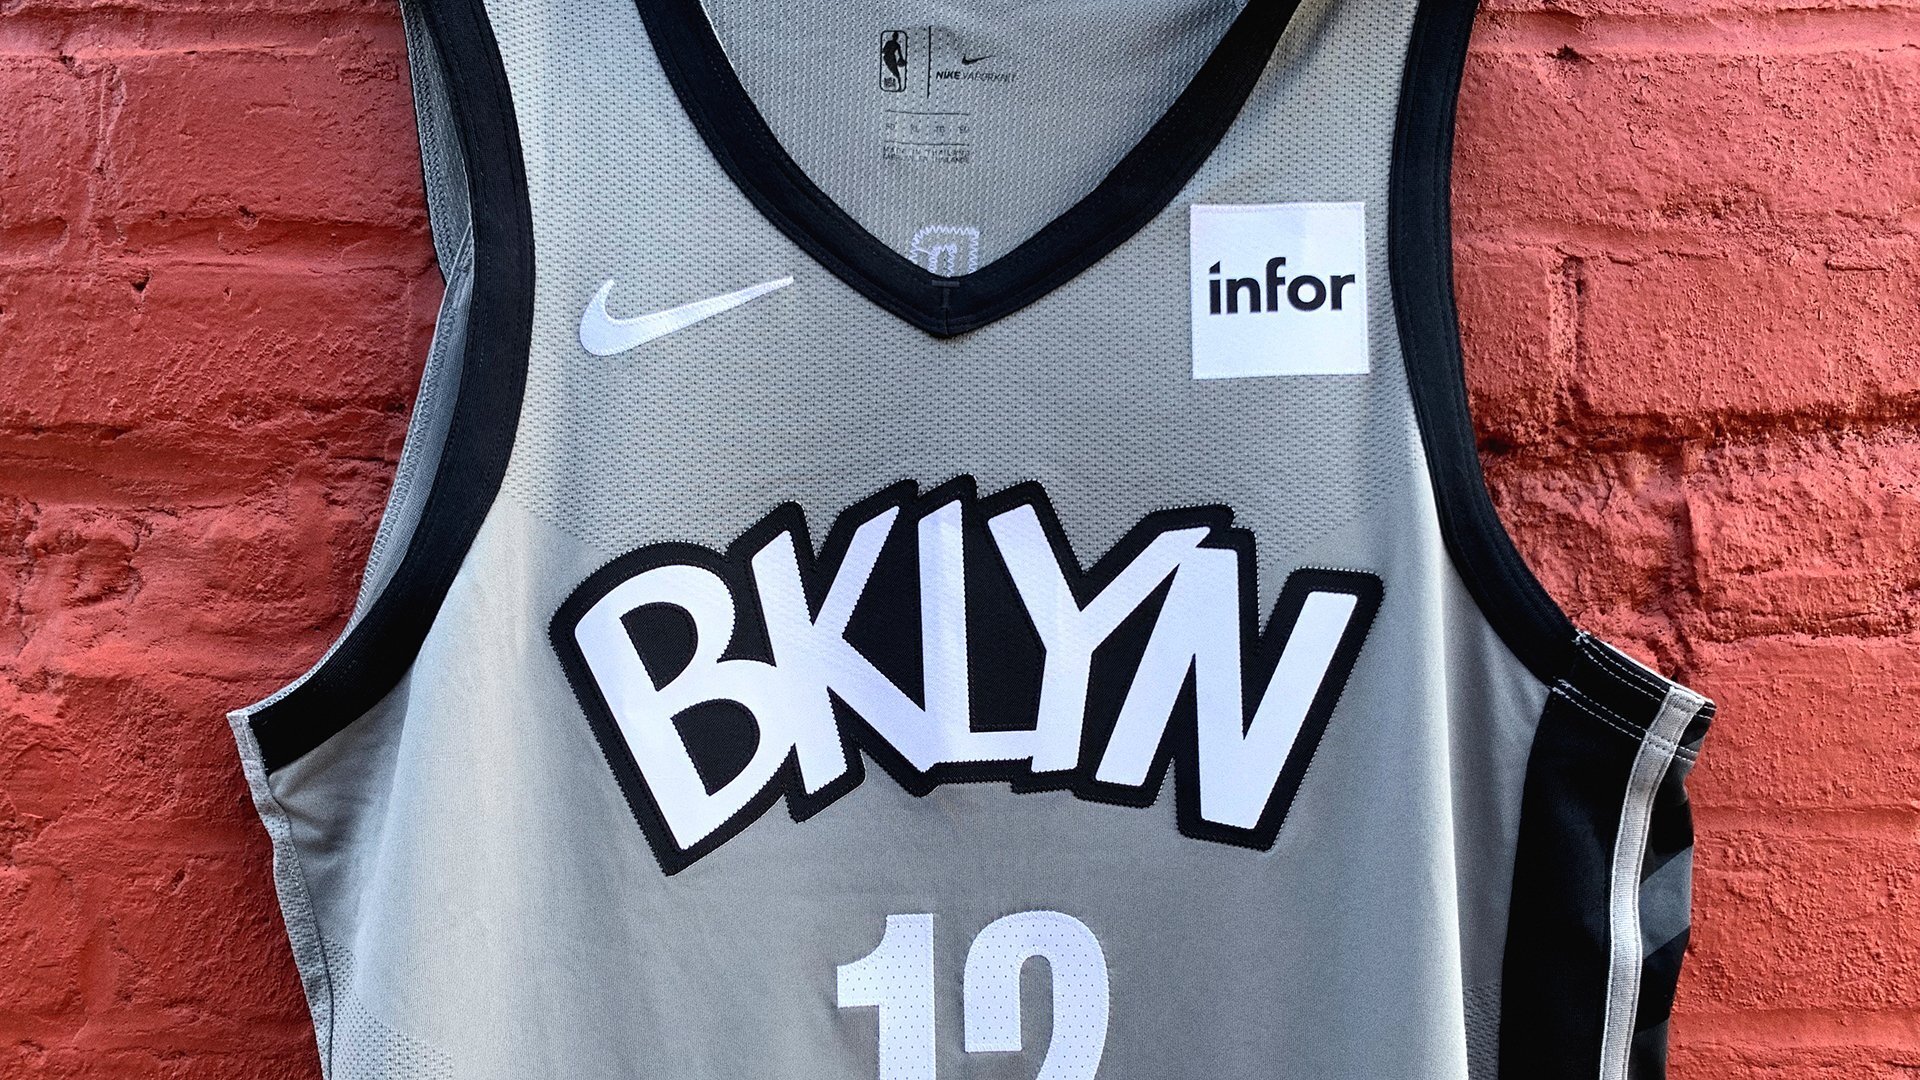 brooklyn nets alternate uniforms